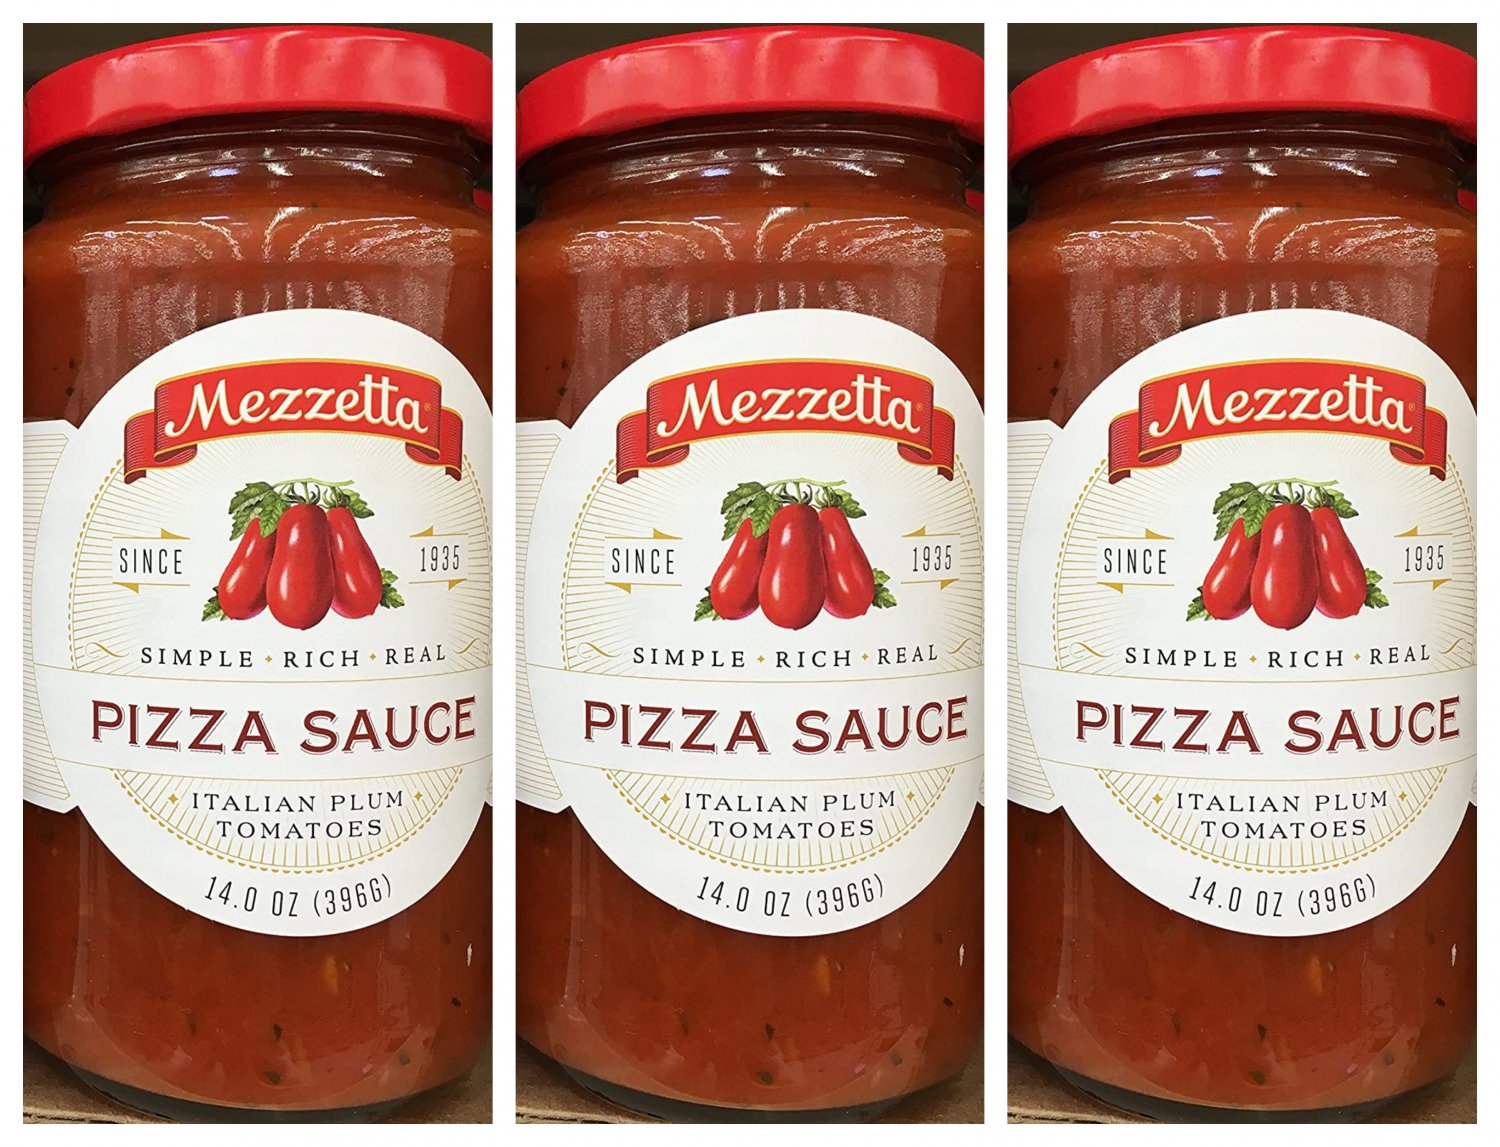 Mezzetta Pizza Sauce Italian Plum Tomatoes 14.0 Ounce Jar (Pack of 3)